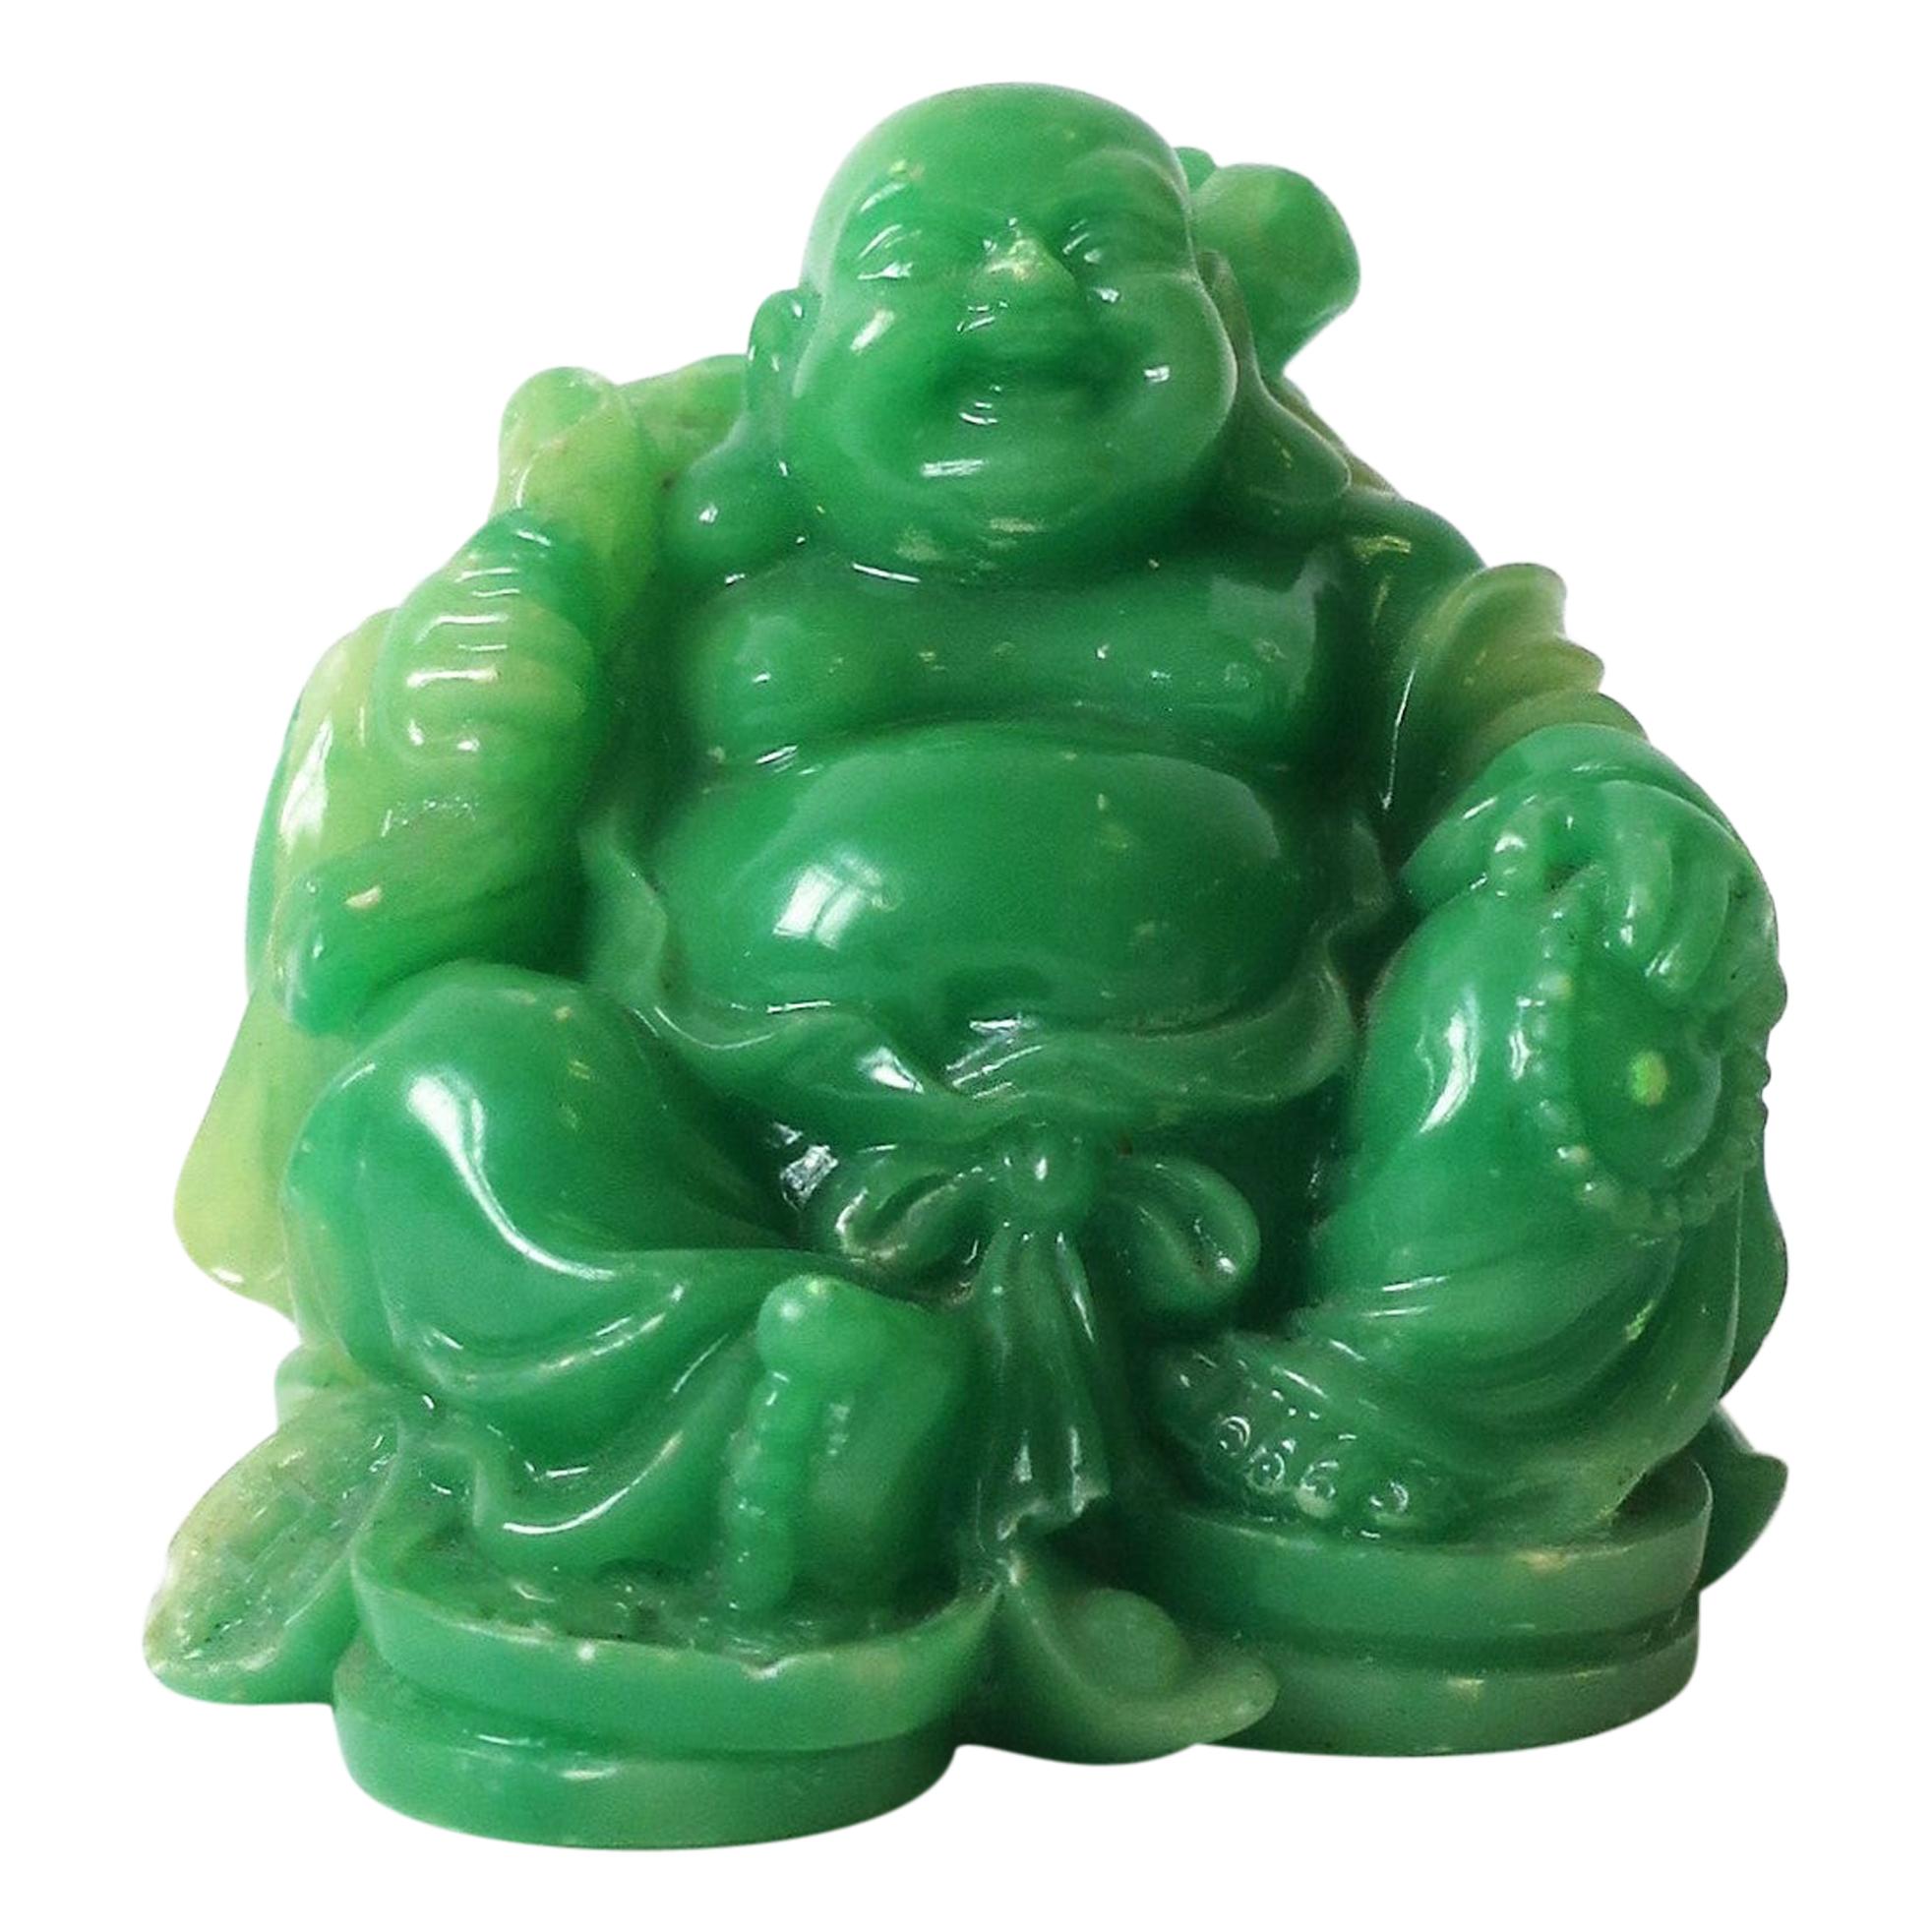 Vintage Jade Green Resin Seated Buddha Sculpture